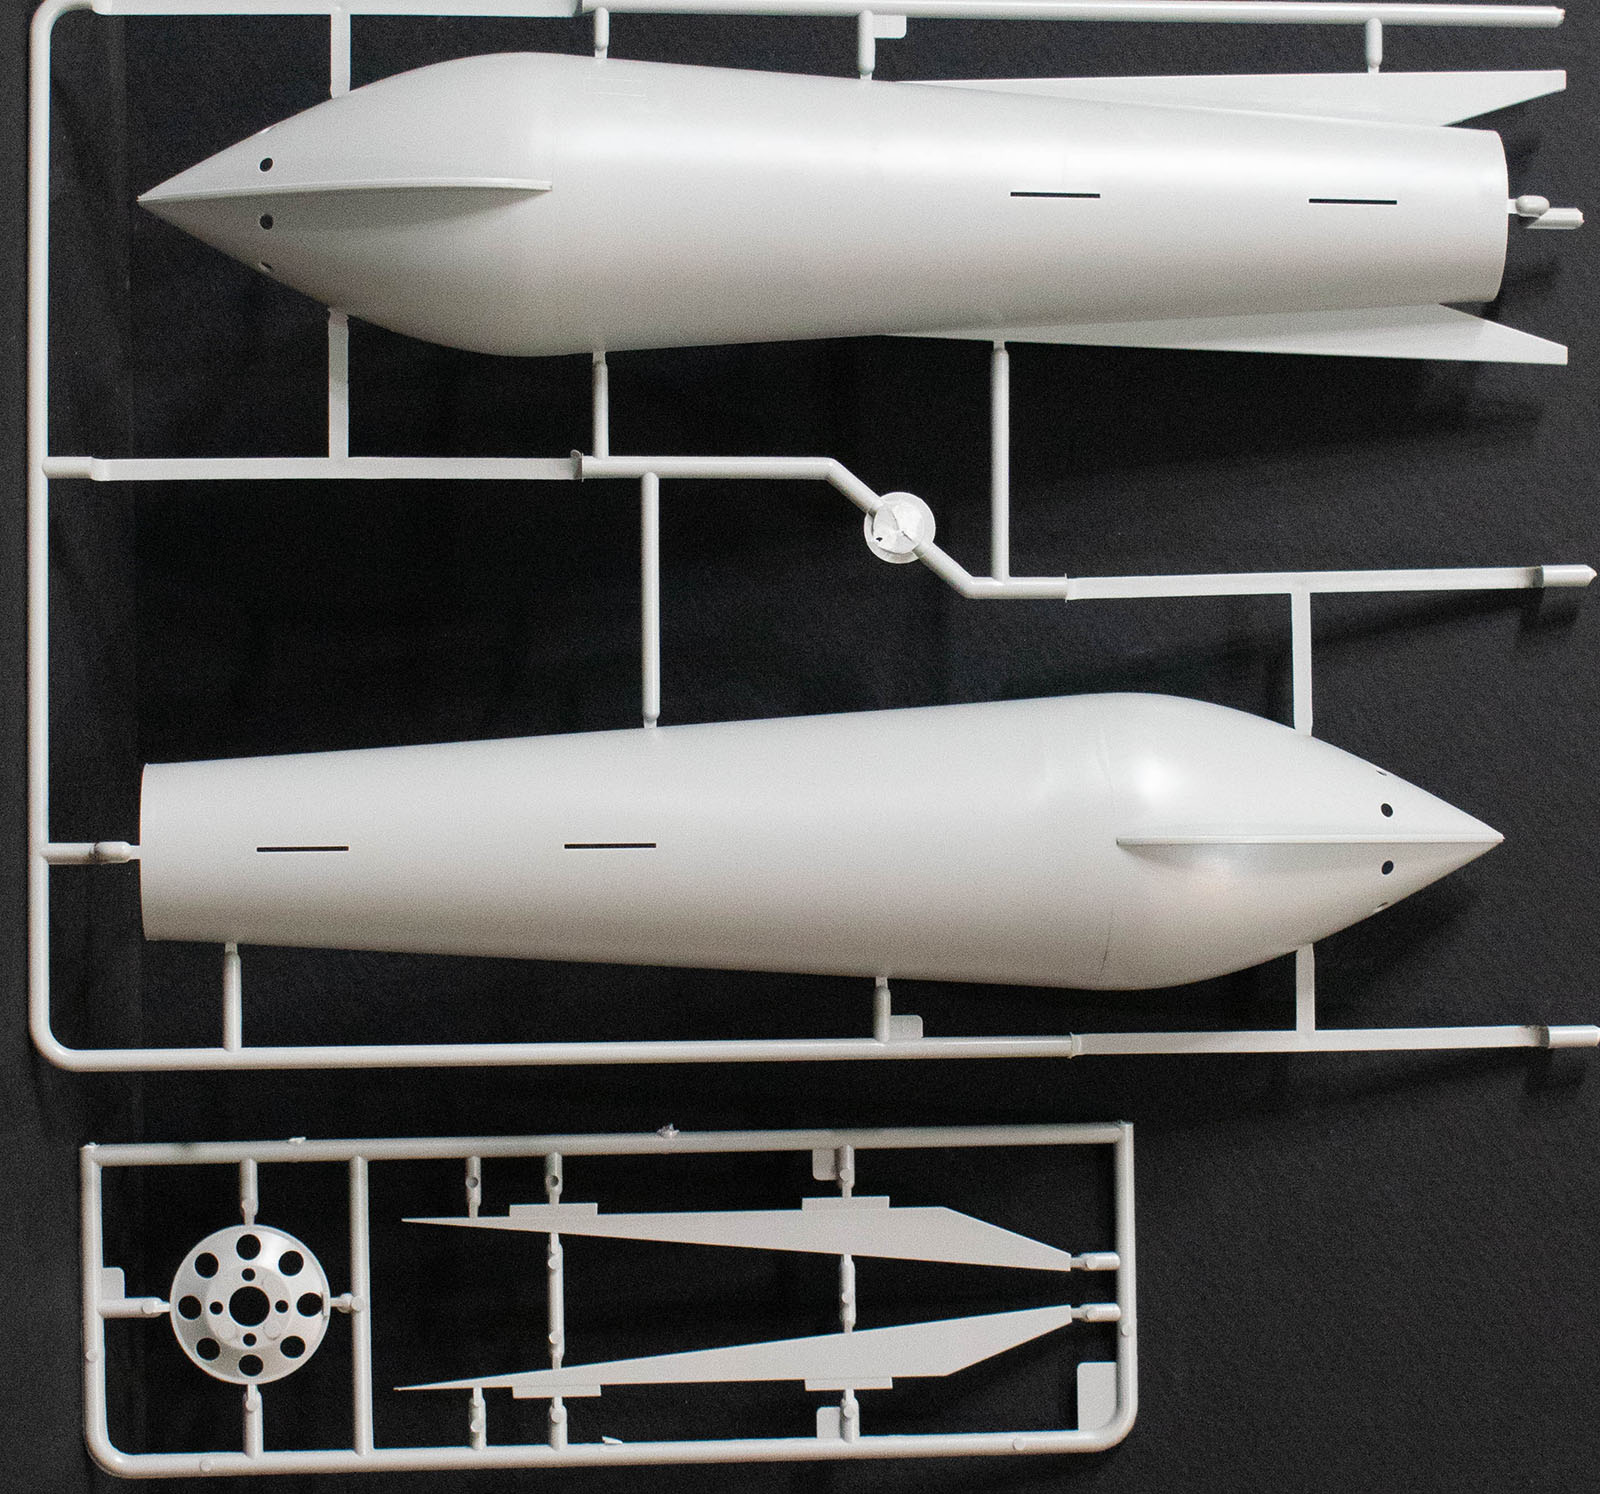 Pegasus Luna Rocketship 1 144th Scale Plastic Model Kit 9311 Pgh9311 MIB for sale online 